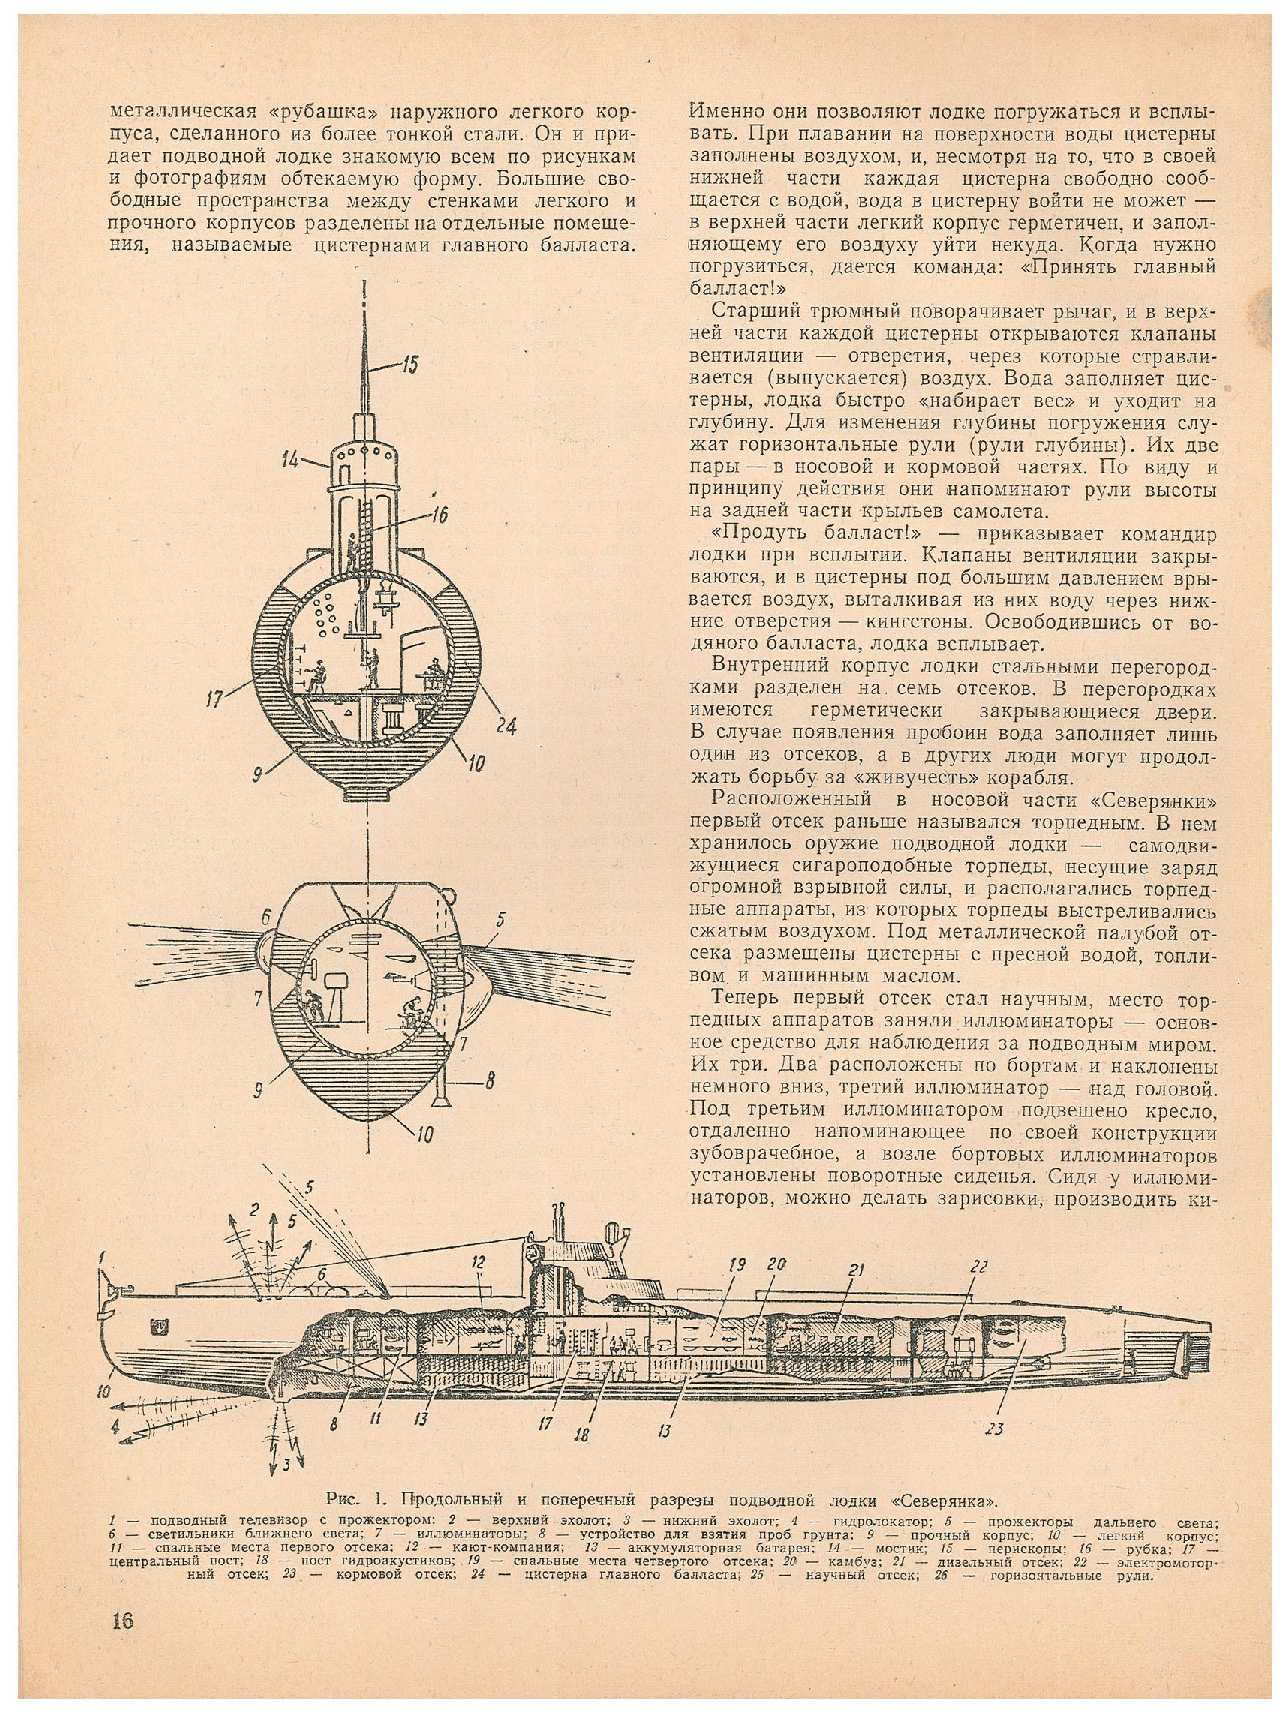 ЮМК 2, 1962, 16 c.